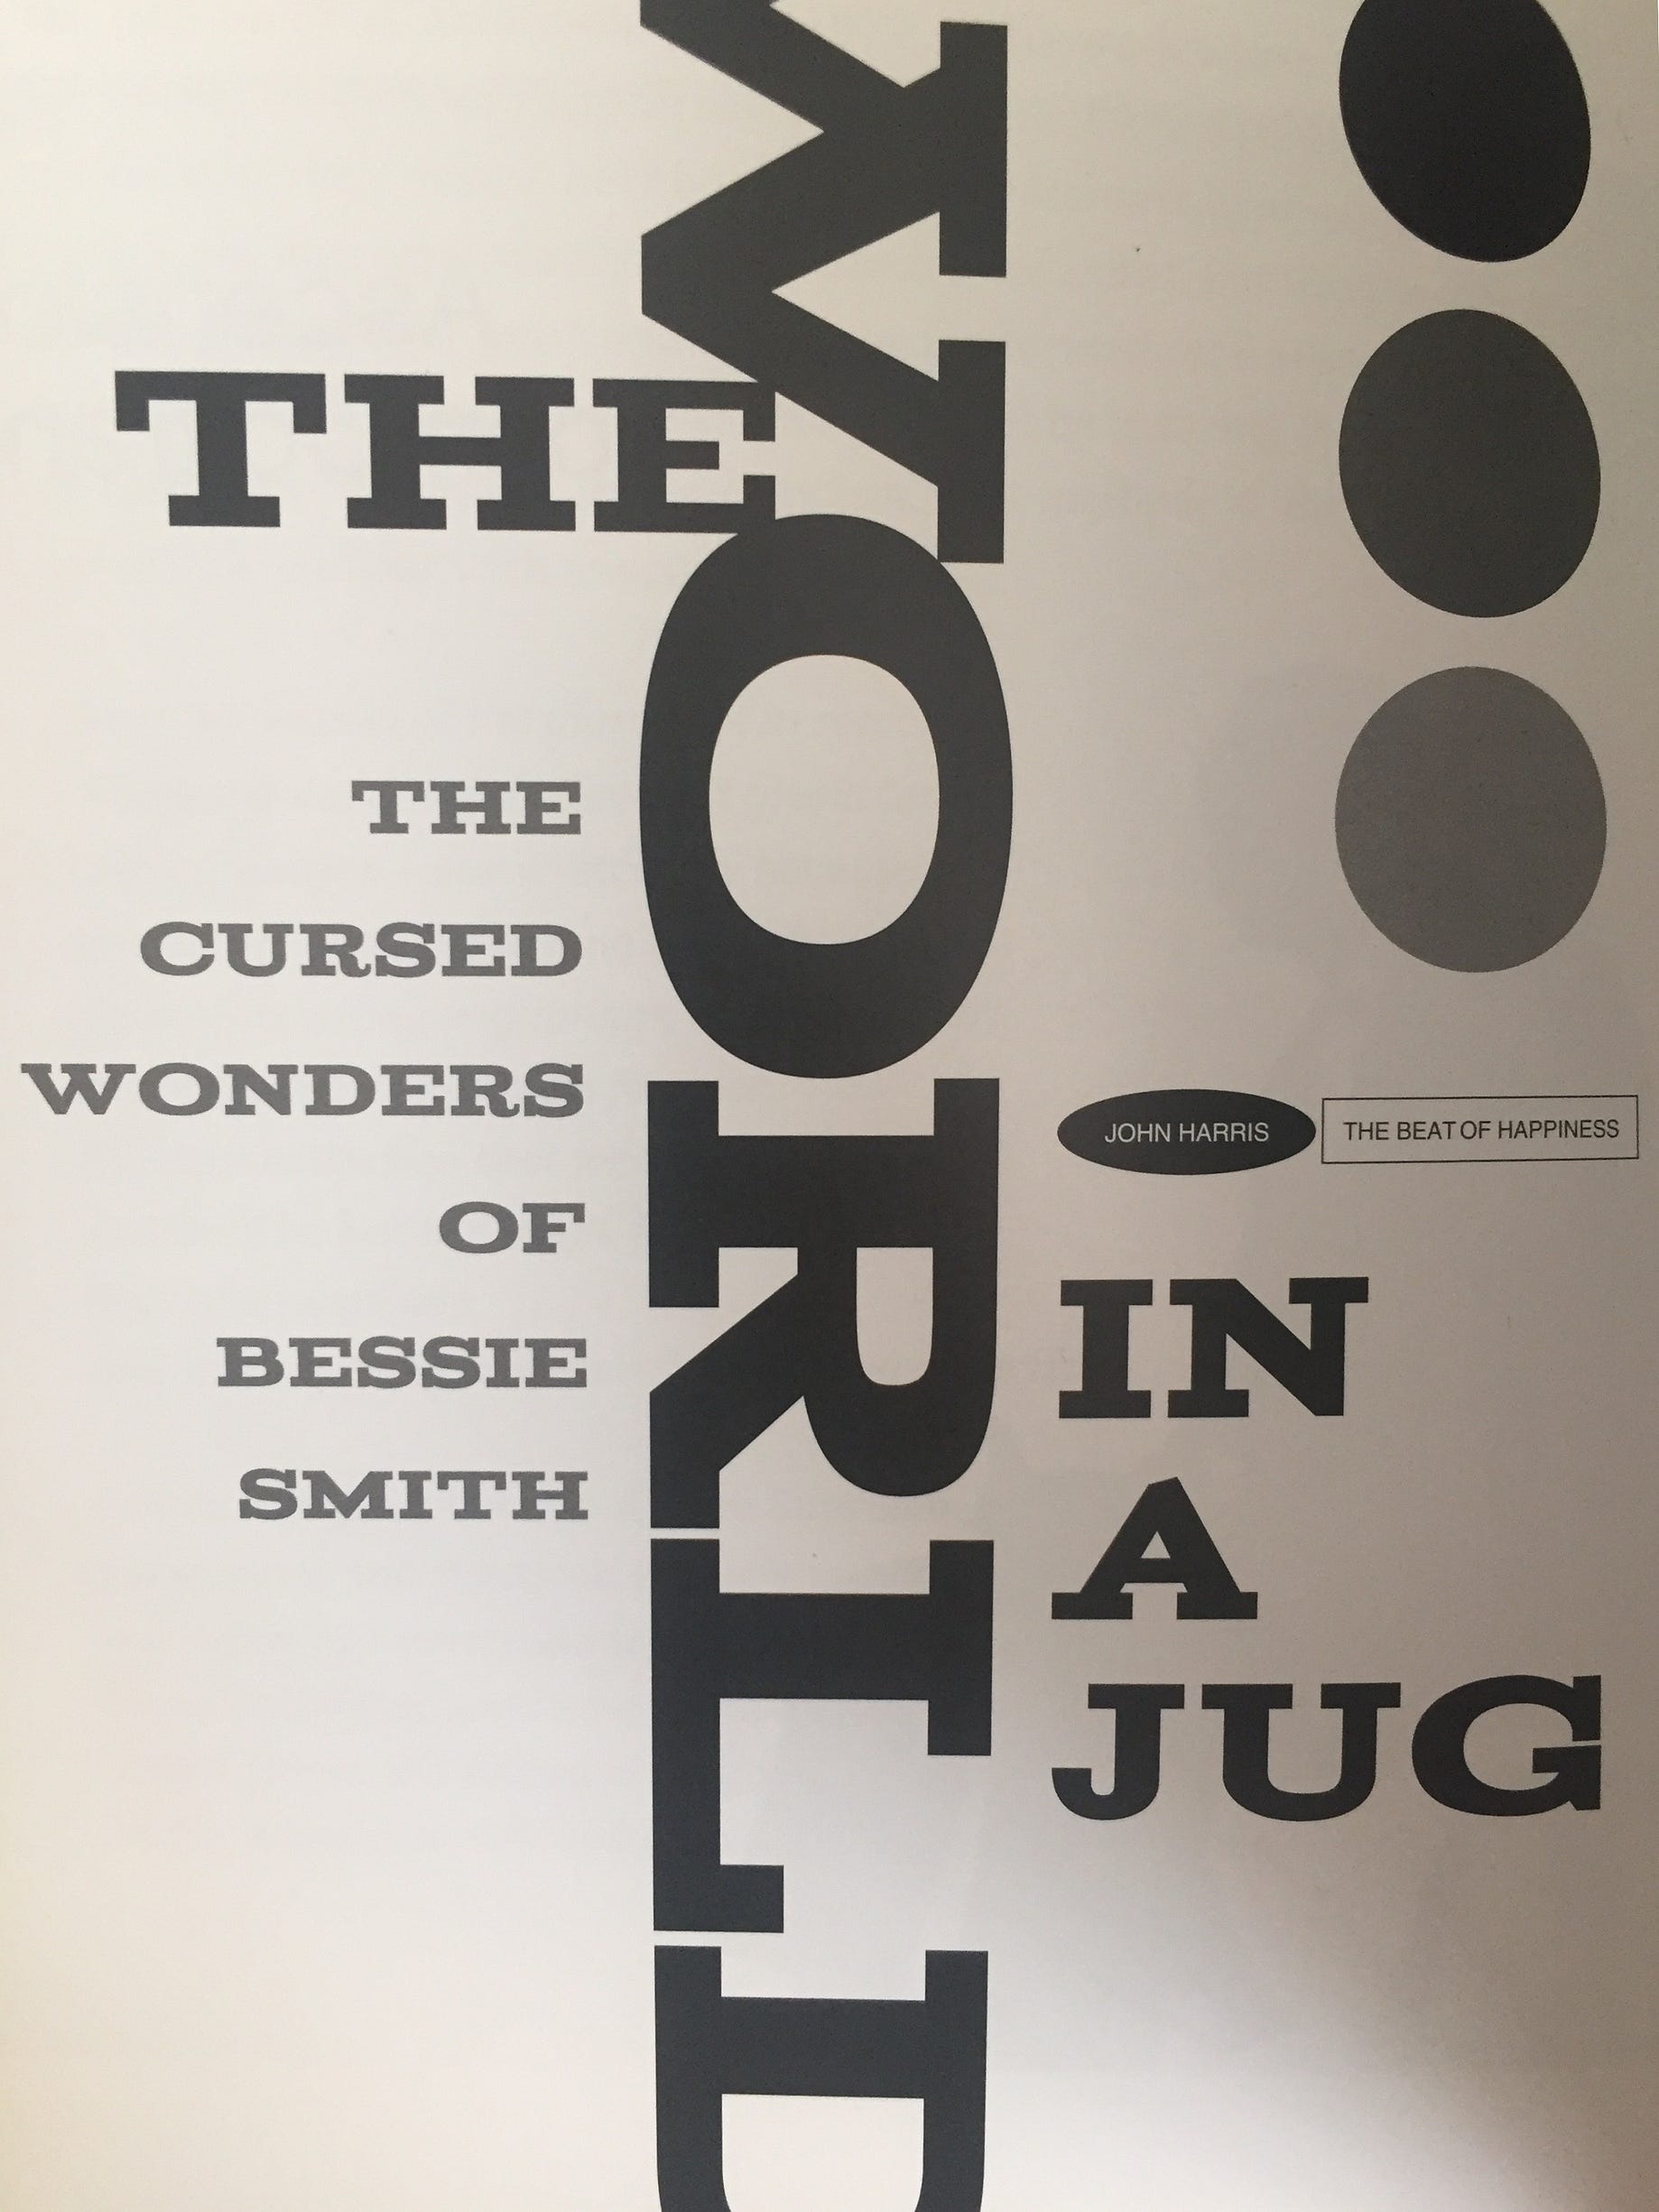 The world in jug. The cursed wonders of Bessie Smith | by John Harris | Medium